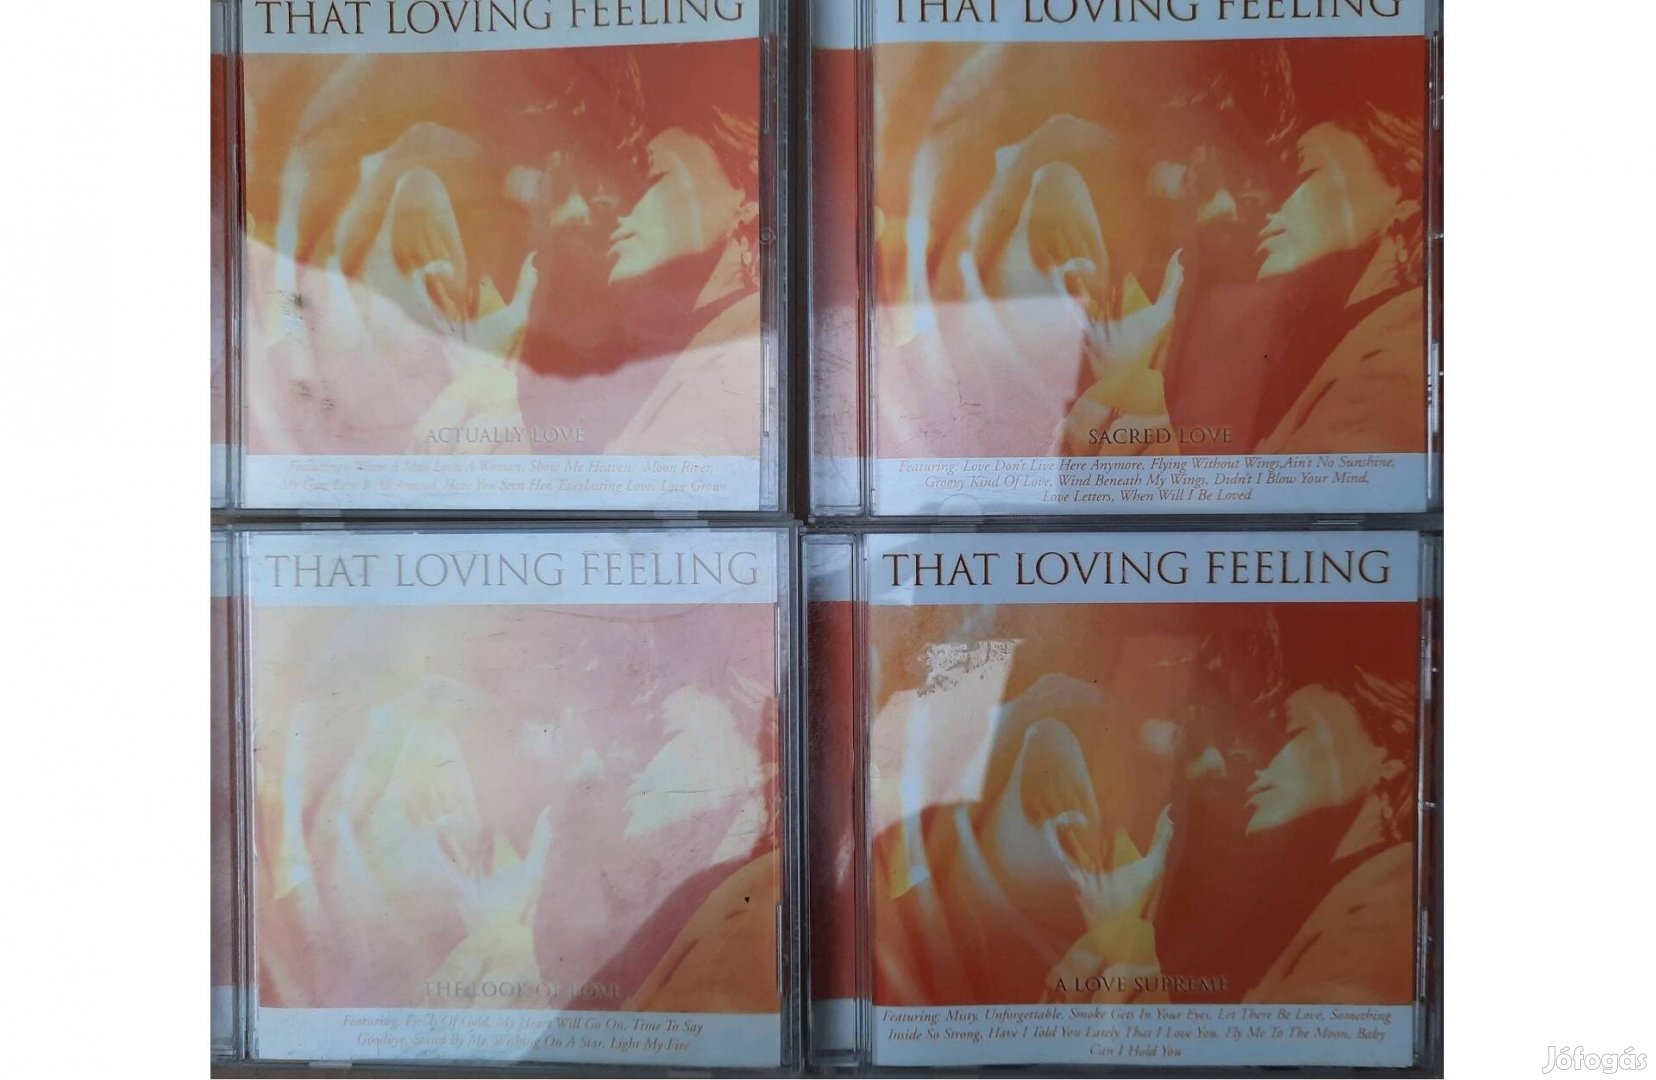 4 darabos That loving feeling CD szett eladó